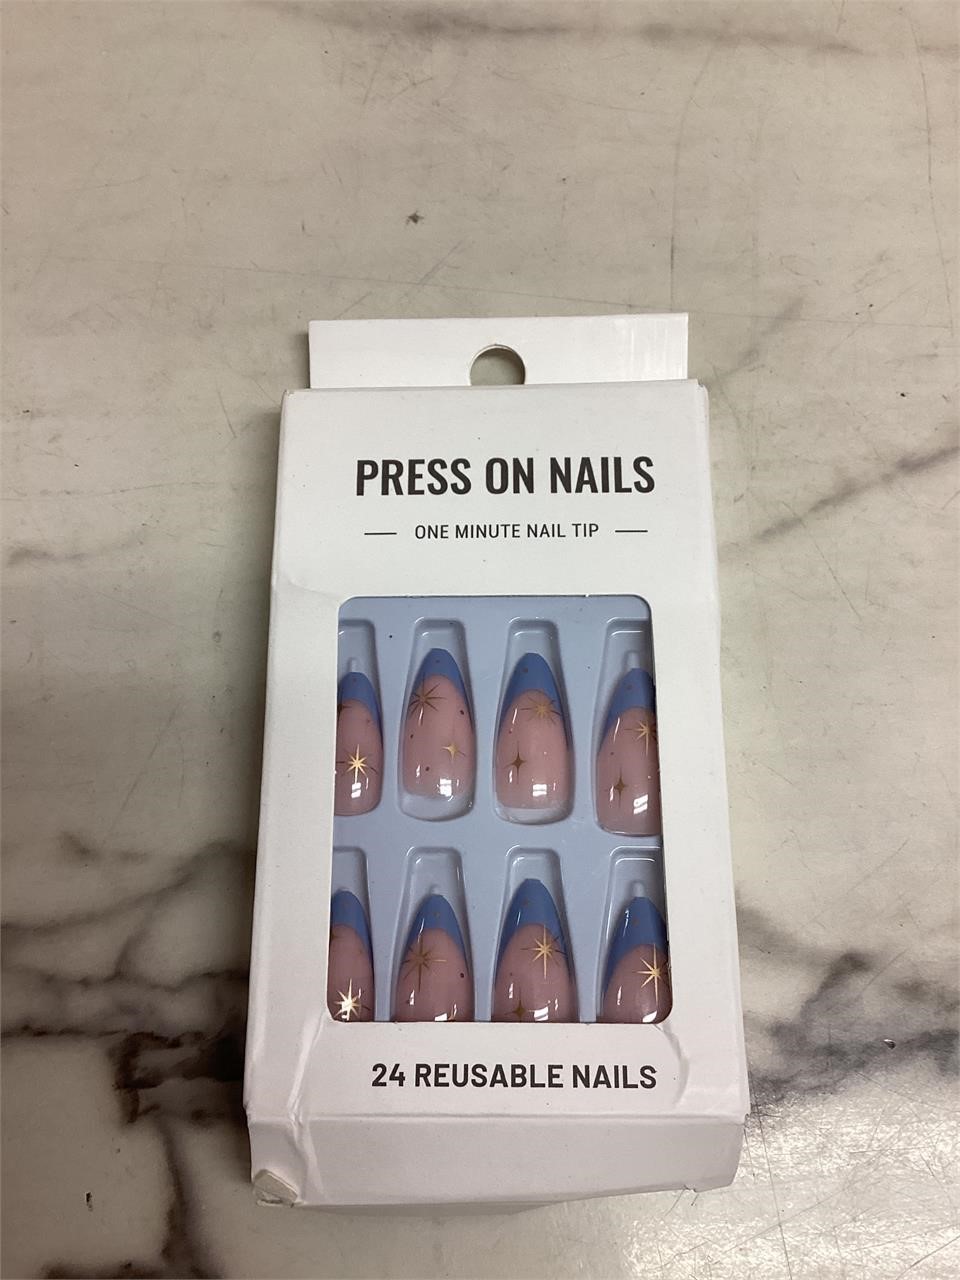 Press on nails